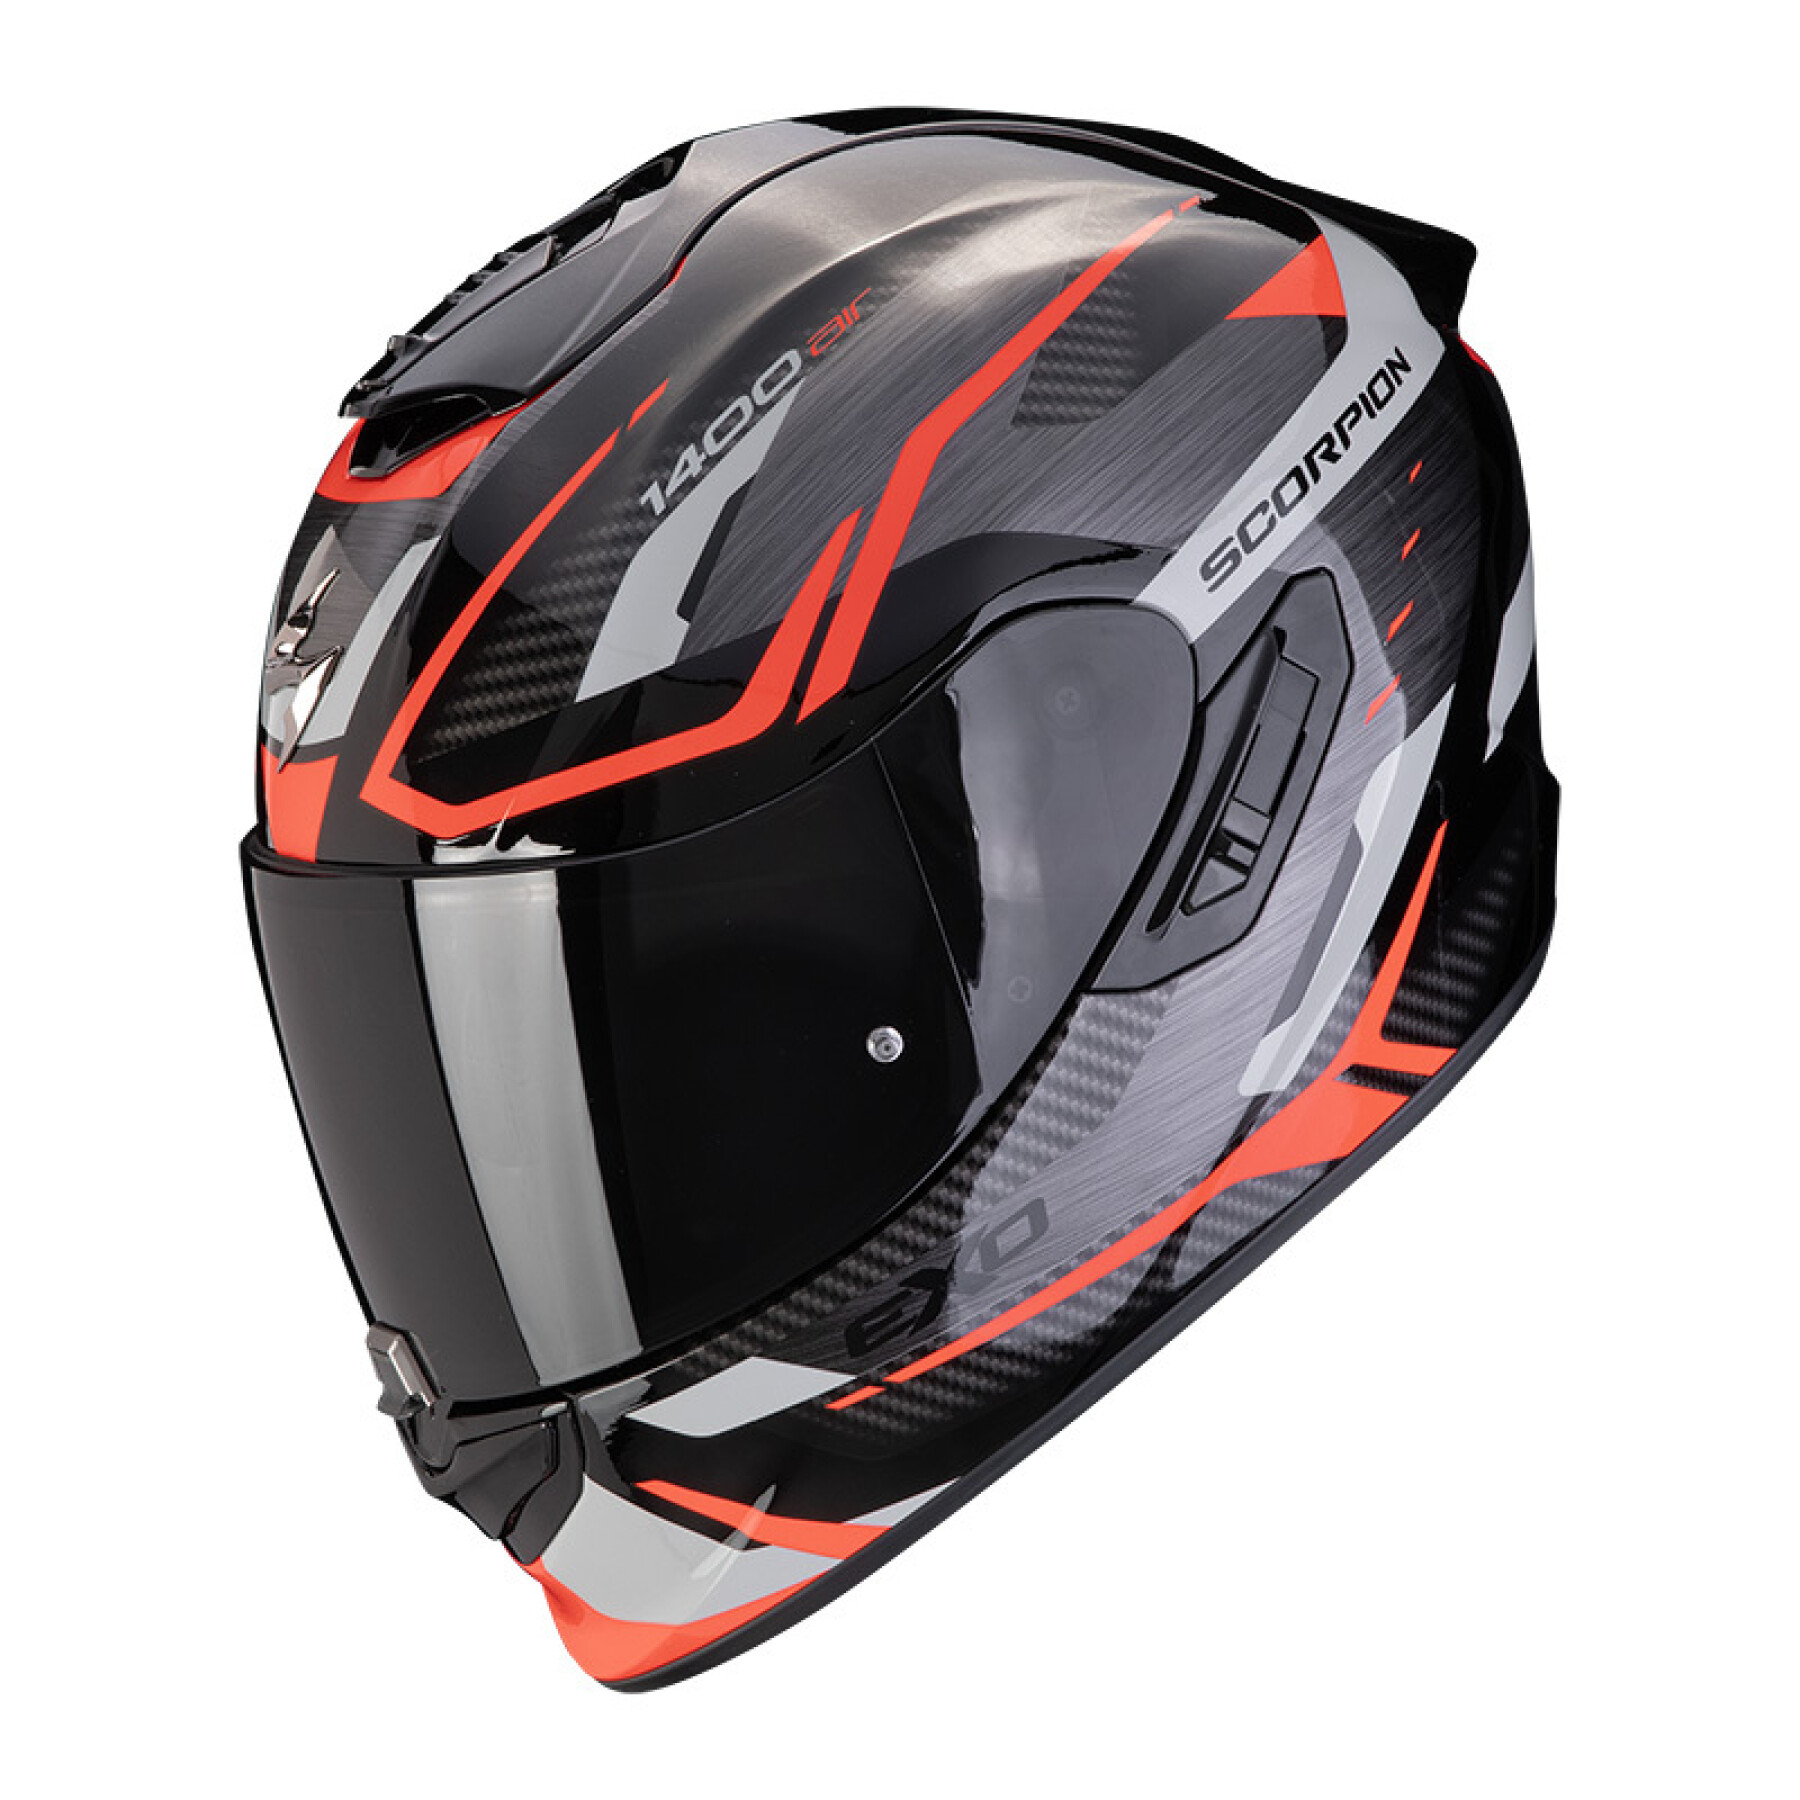 Full face motorcycle helmet Scorpion Exo-1400 Evo II Air Accord